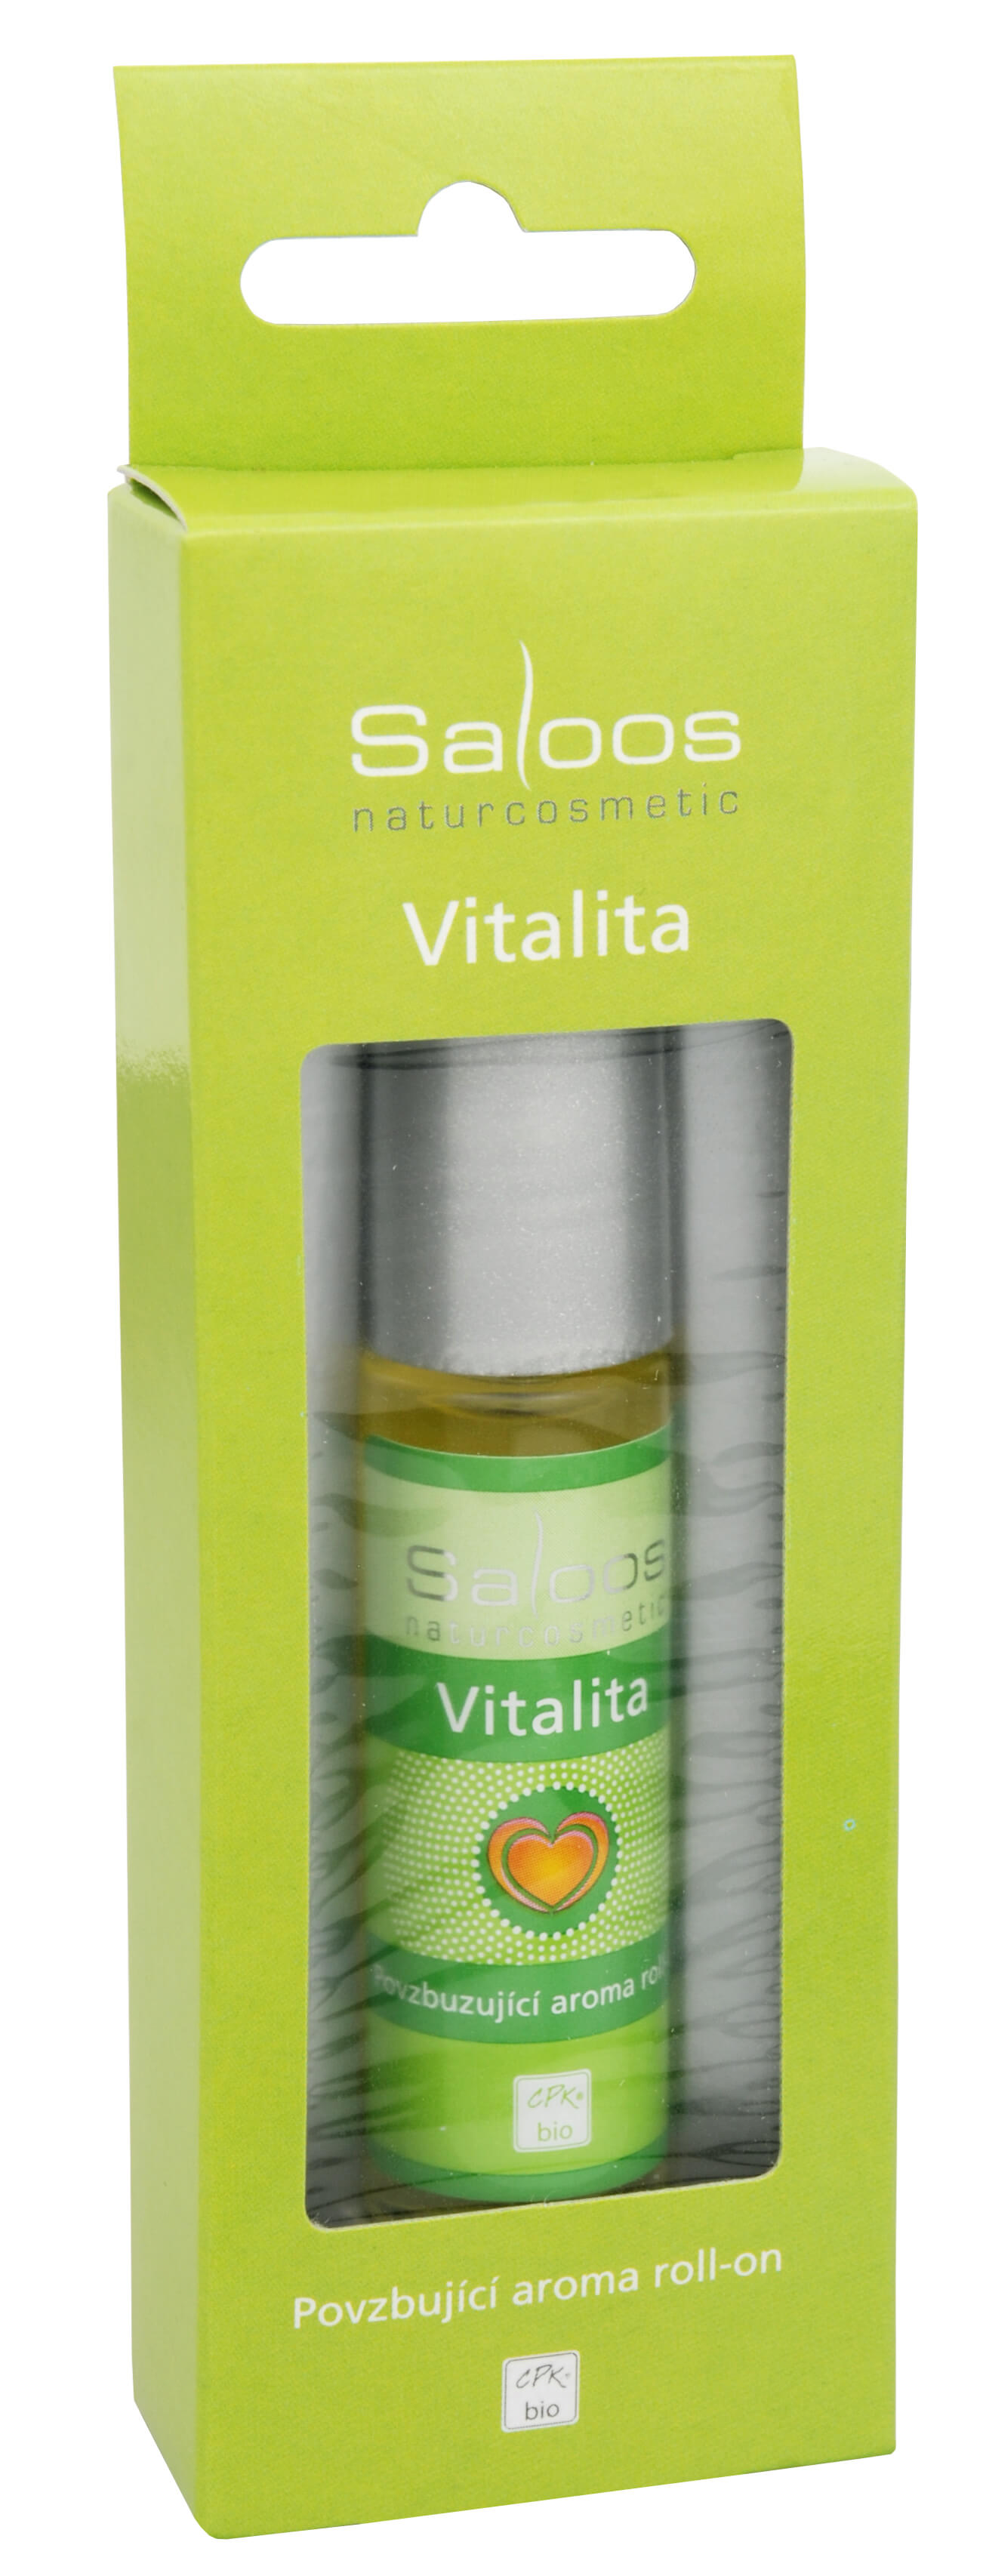 Zobrazit detail výrobku Saloos Bio Aroma roll-on - Vitalita 9 ml